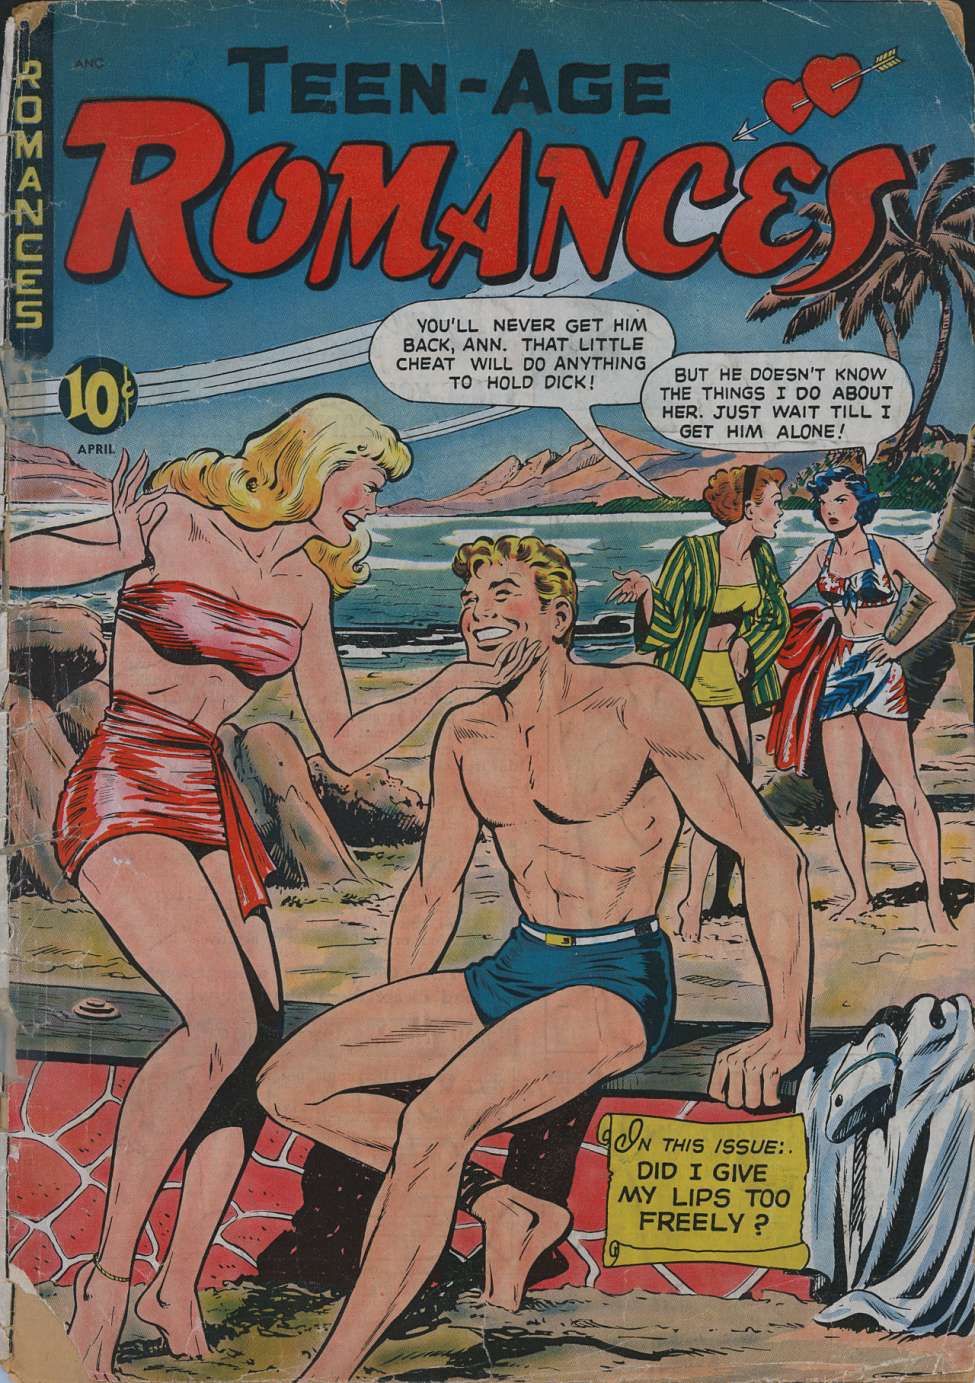 Teen Age Romances #9, St. John